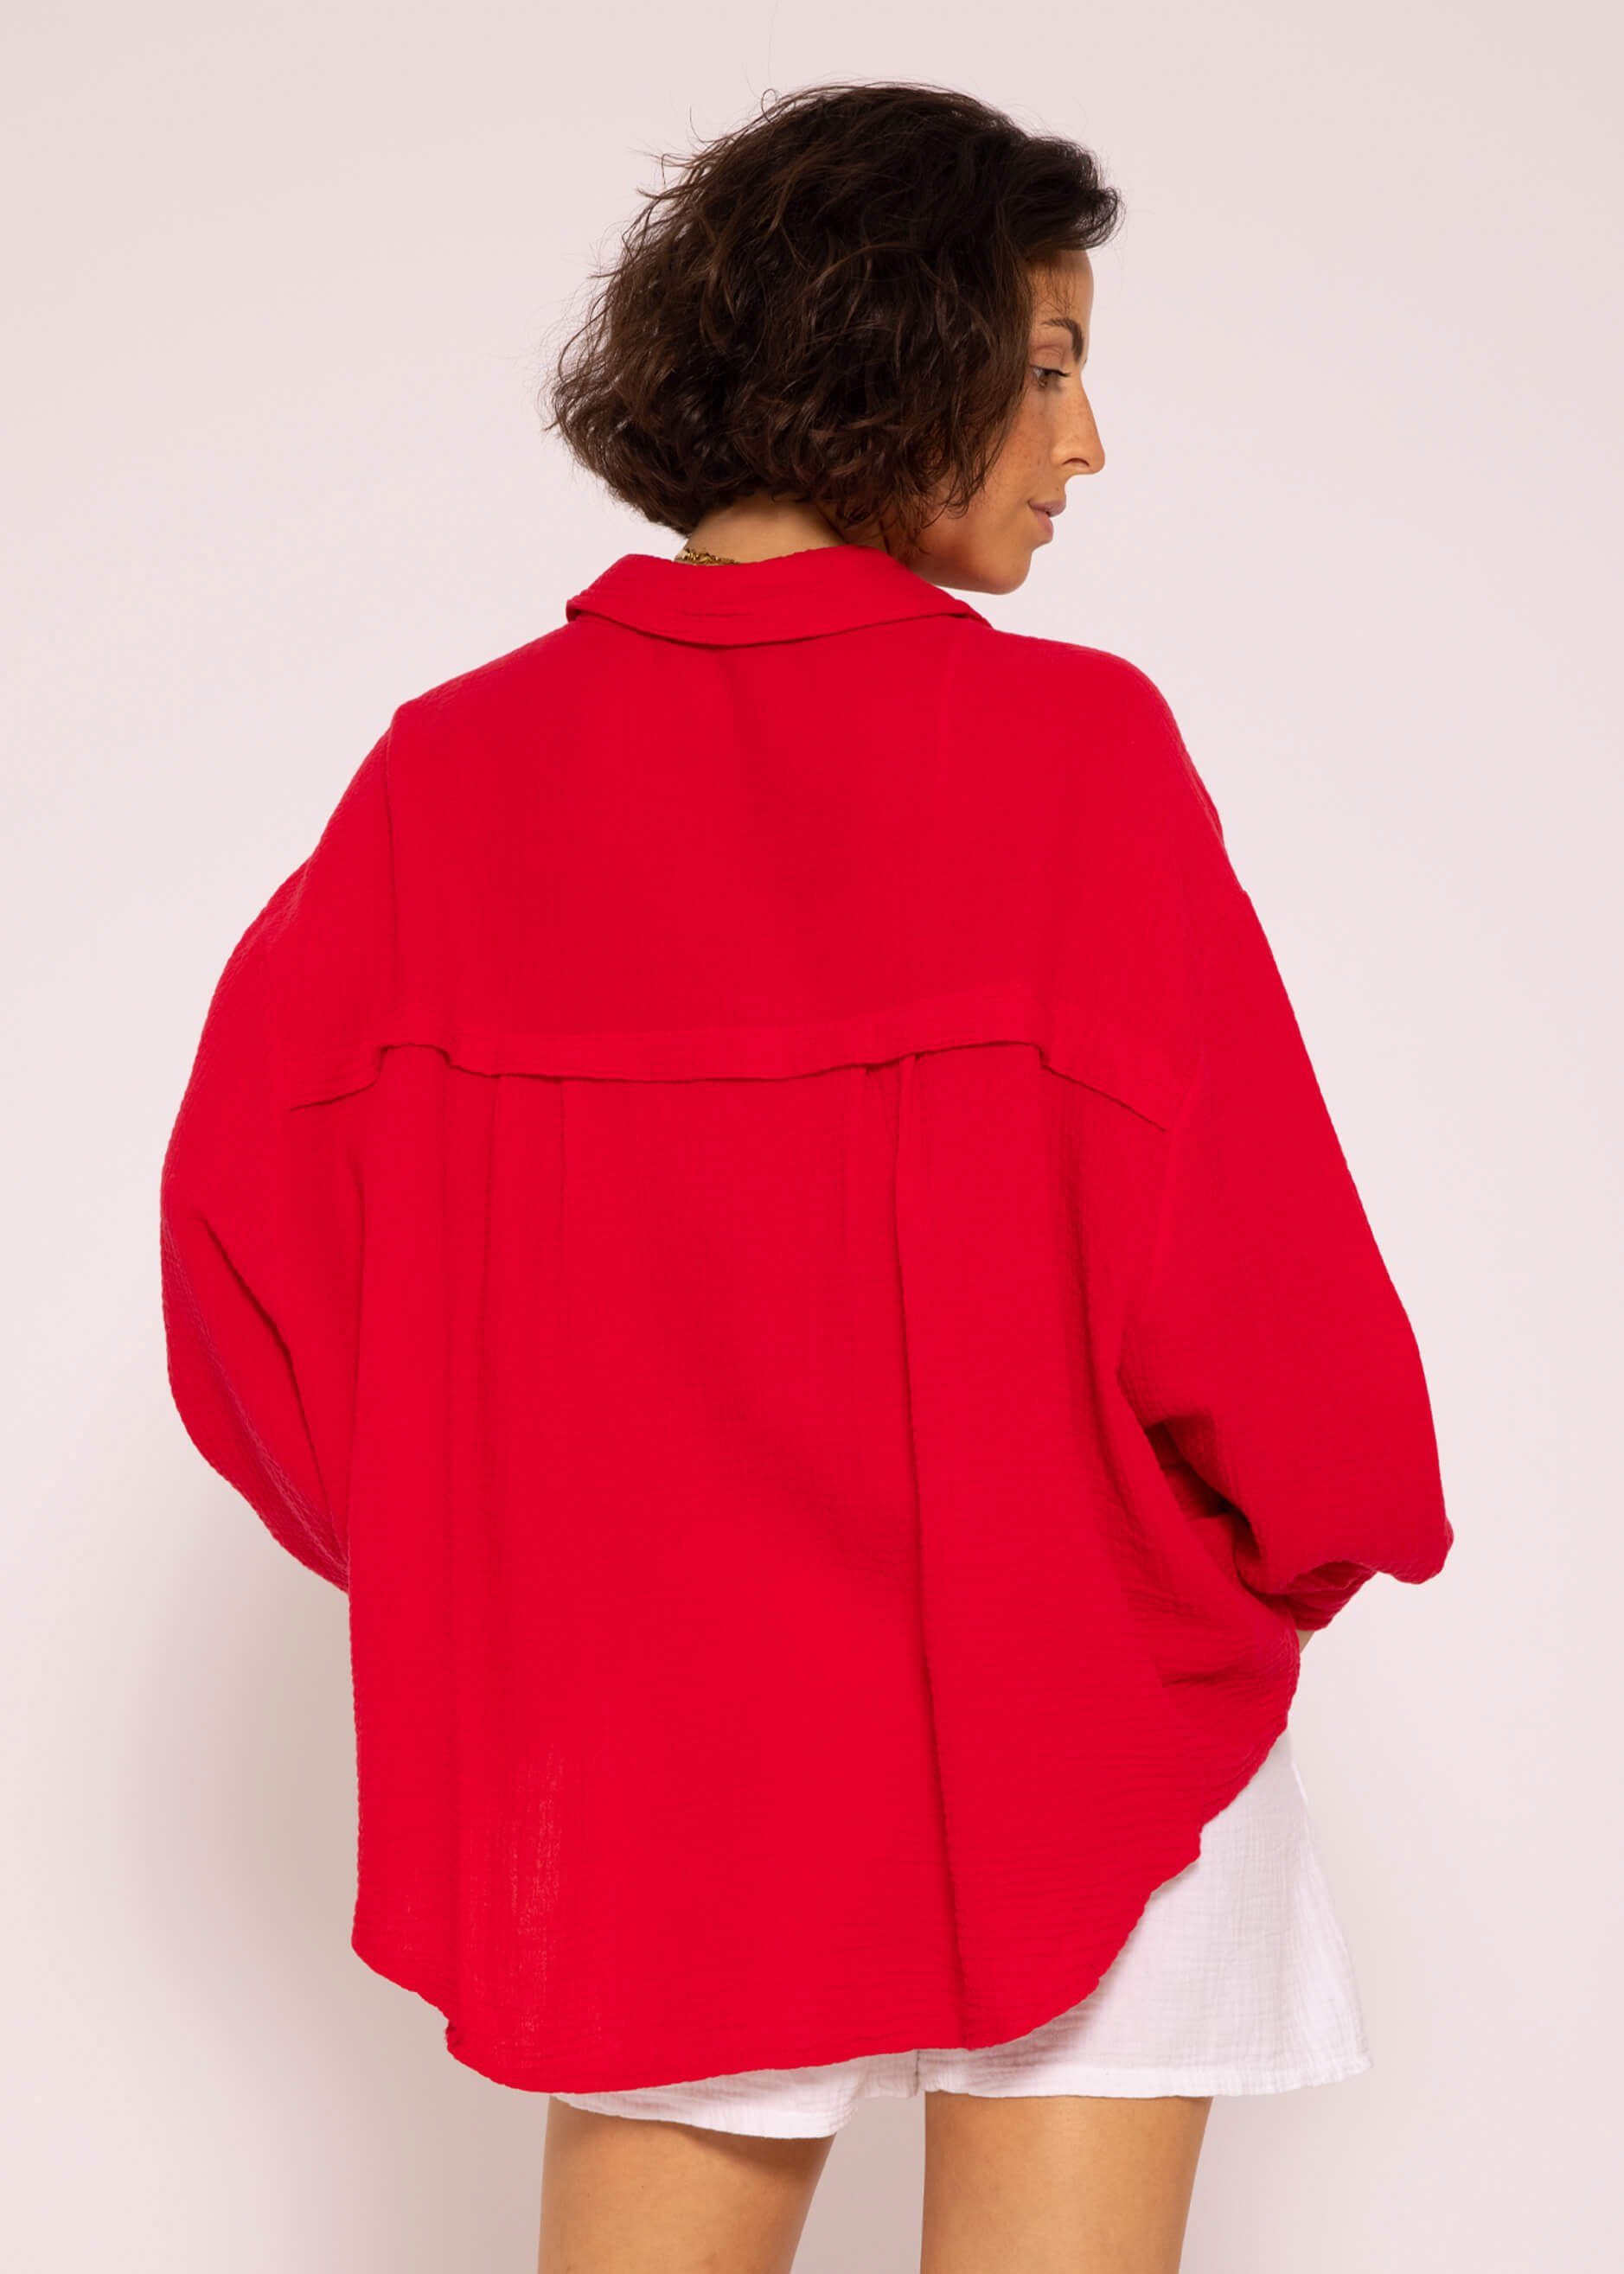 Langarm Oversize Musselin Longbluse Damen mit lang One V-Ausschnitt, Hemdbluse Rot aus 36-48) Bluse Size SASSYCLASSY Baumwolle (Gr.